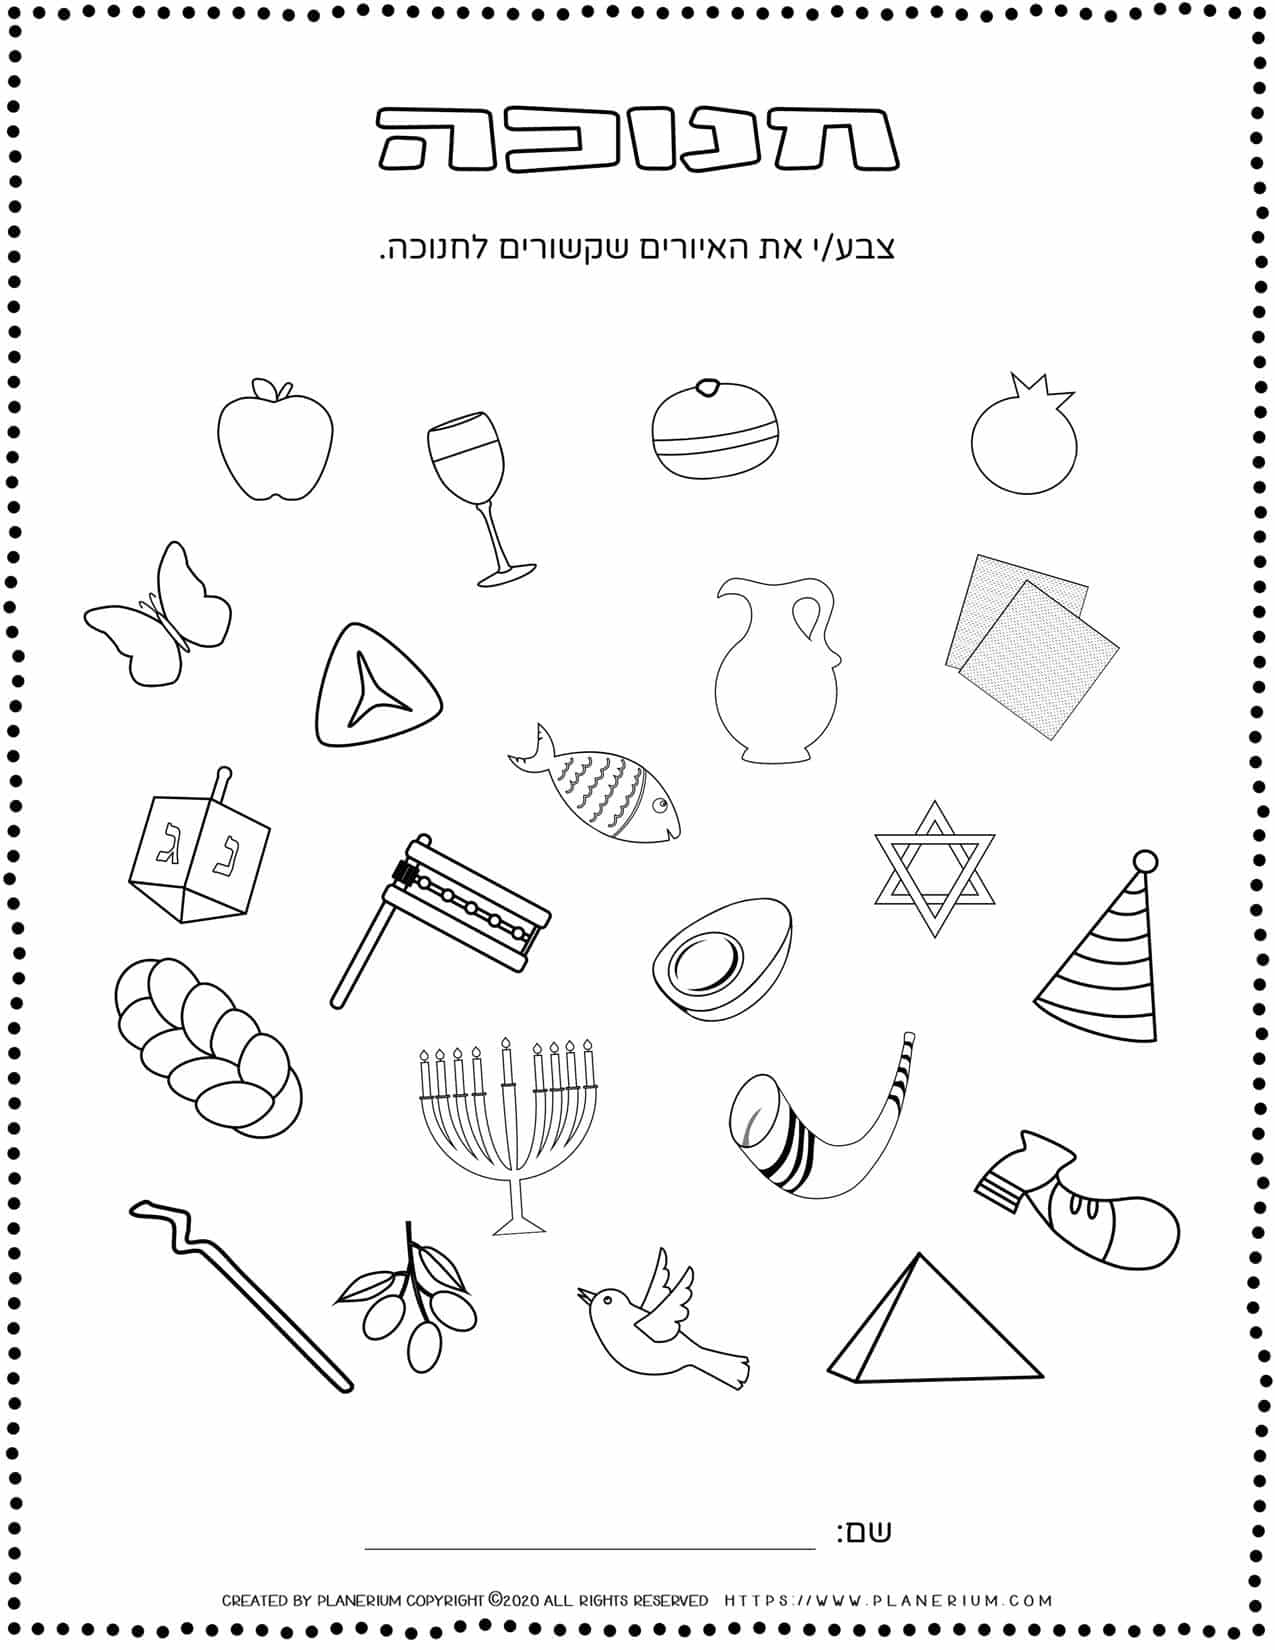 Hanukkah Worksheets - Related Objects - Hebrew - Free Printable | Planerium